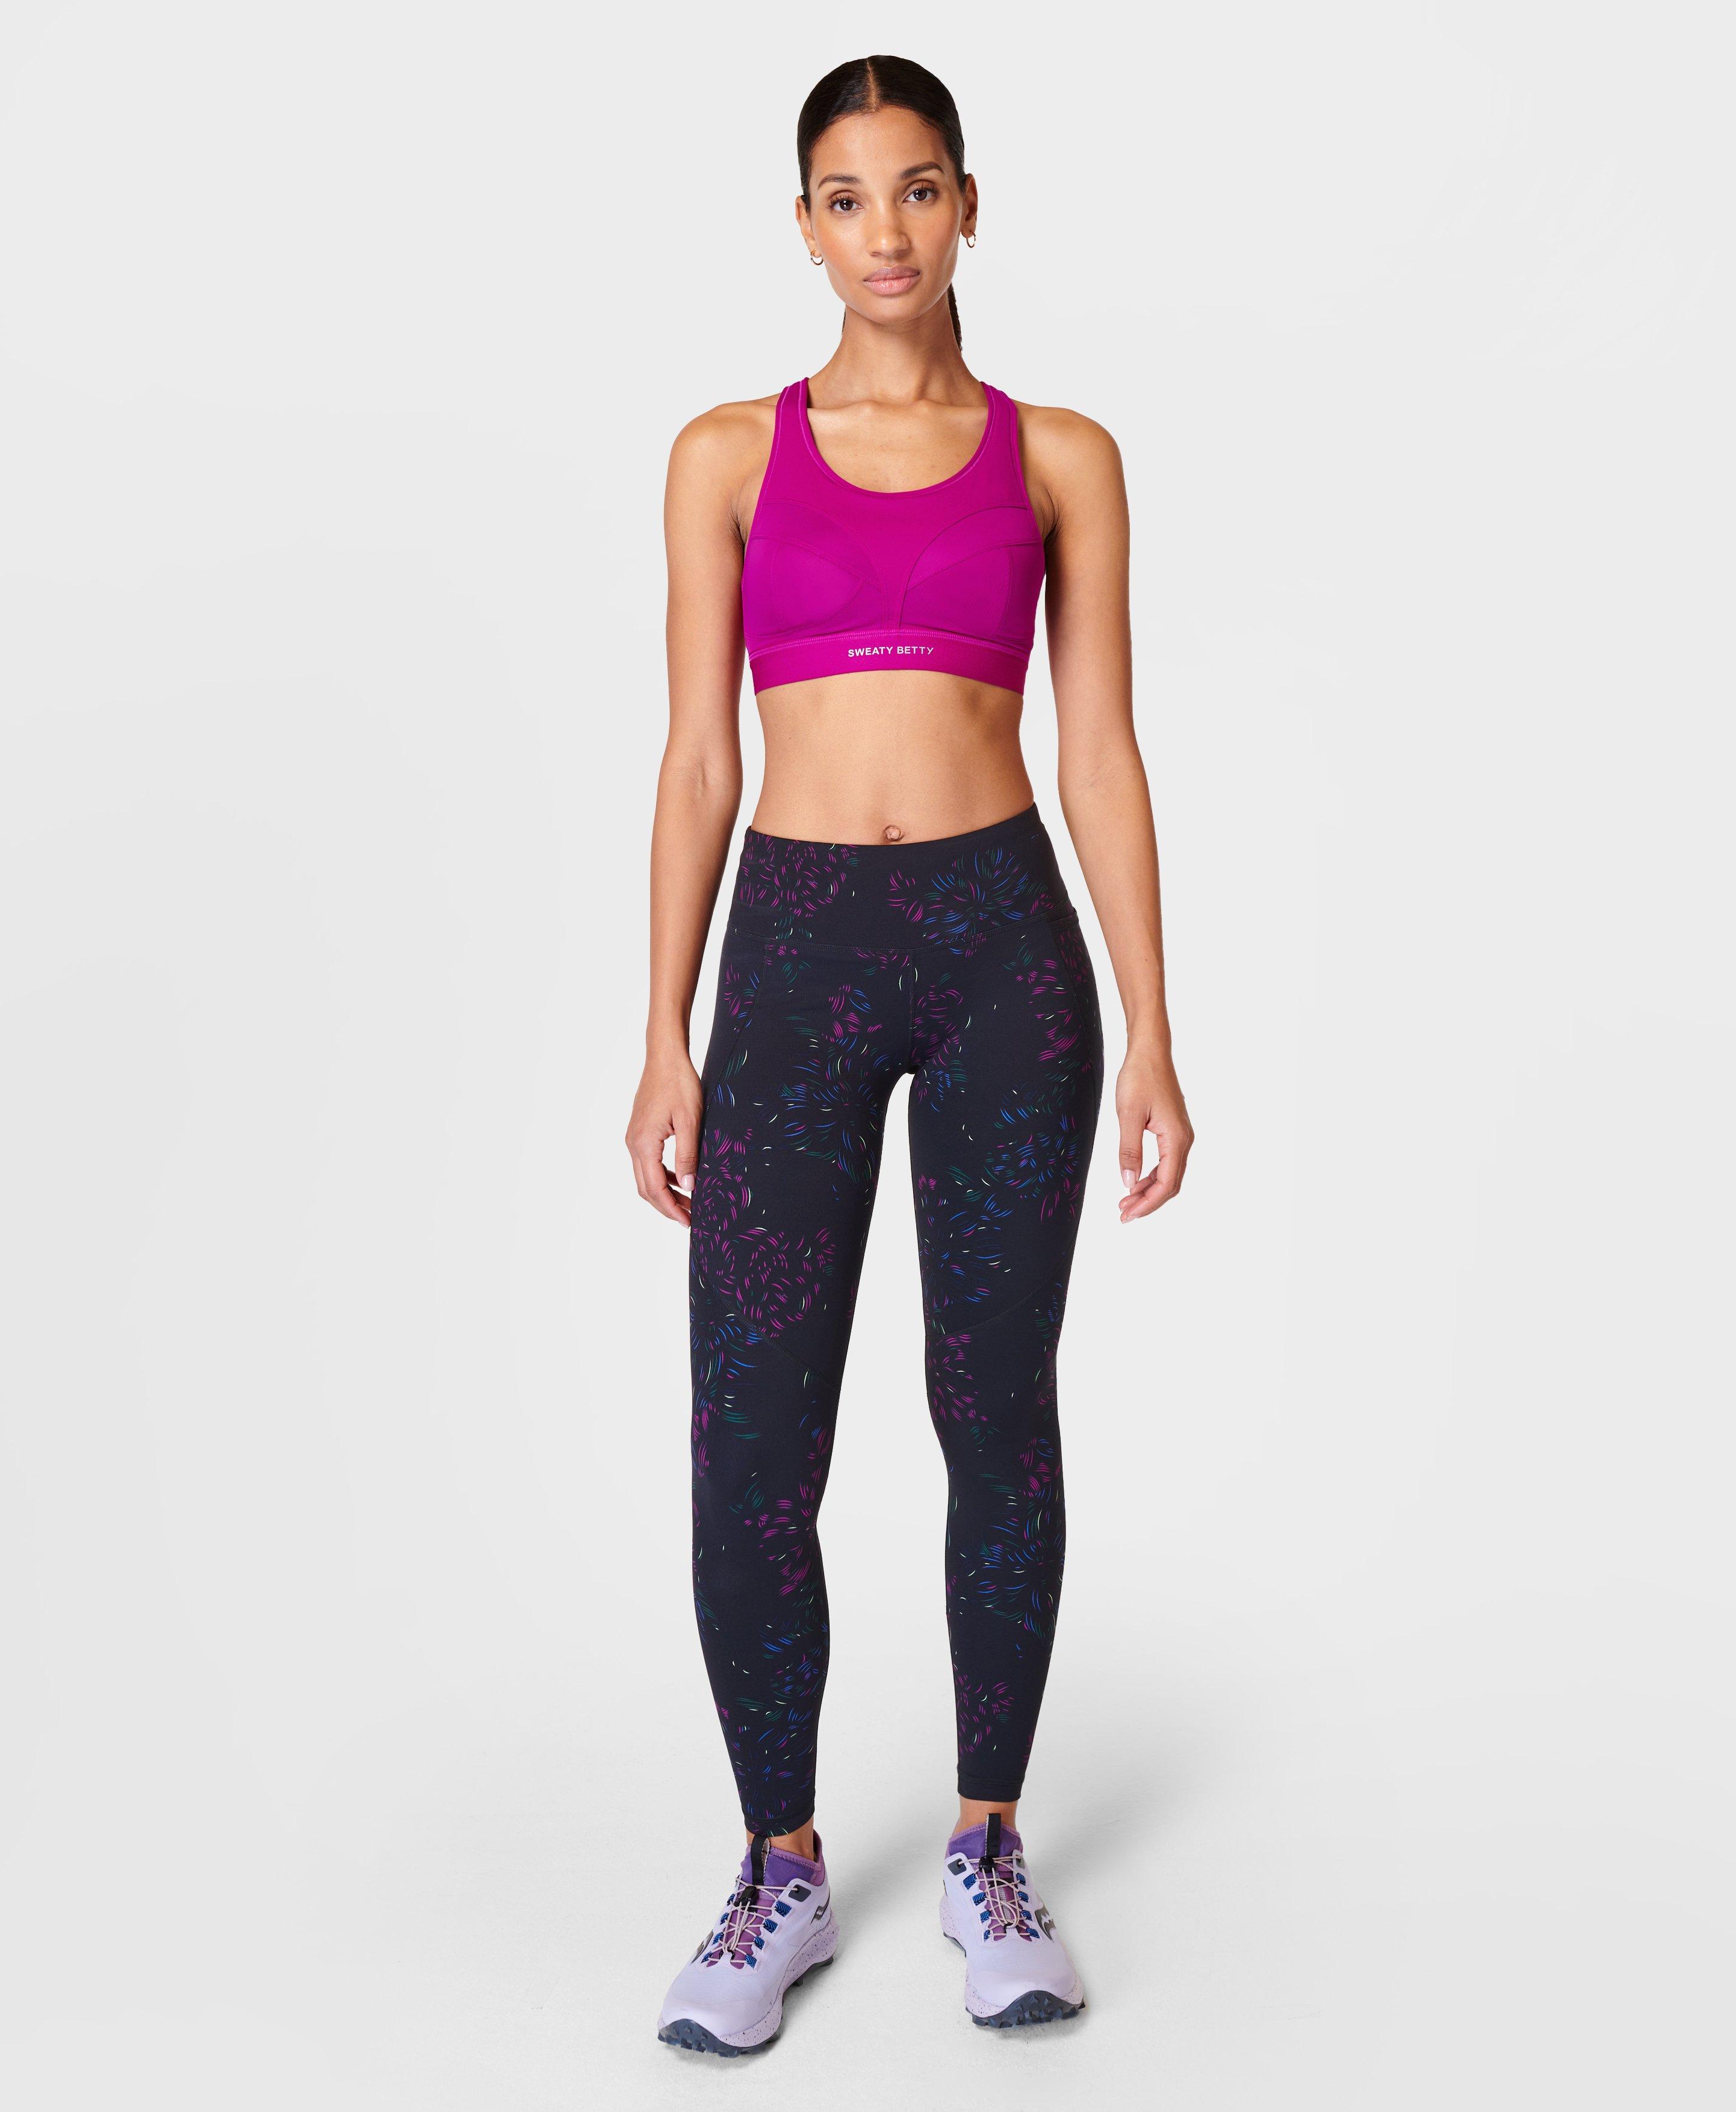 Nike Womens Yoga Fitness Athletic Leggings Black  